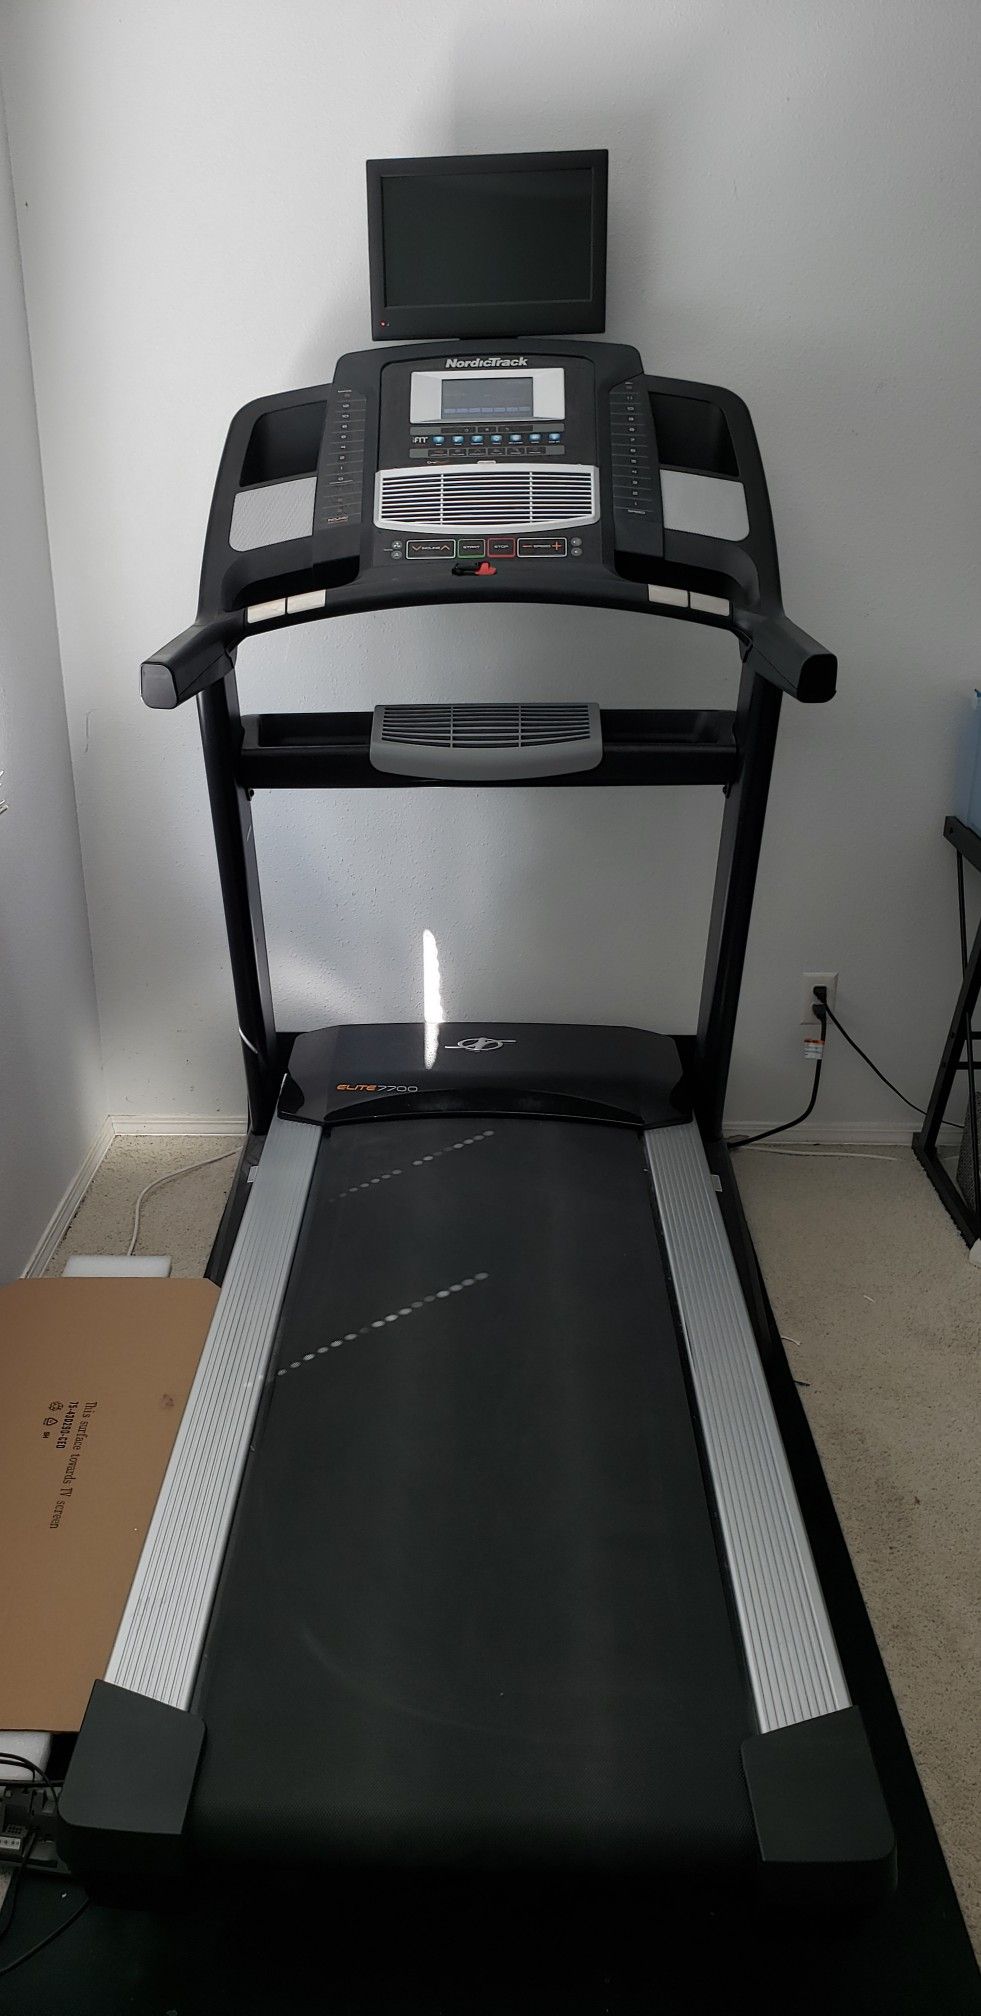 NordicTrack Elite 7700 treadmill